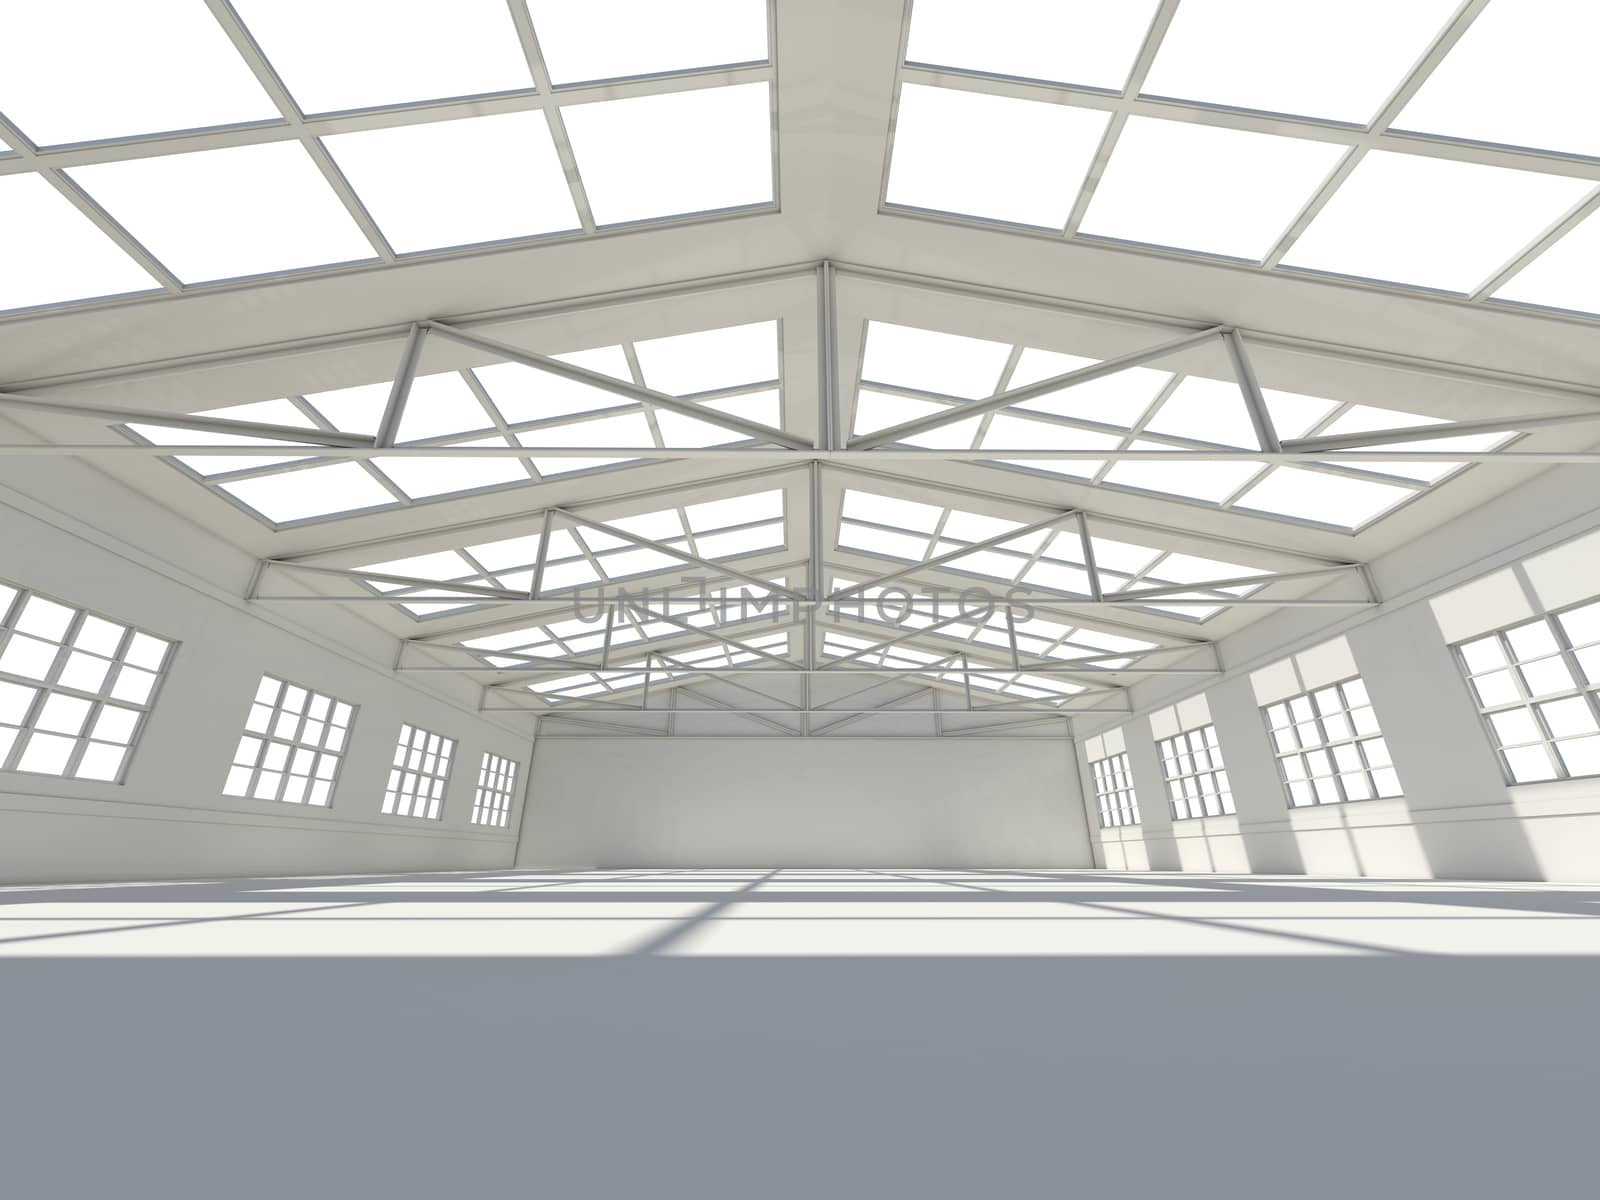 Huge empty light warehouse. Industrial concept. 3D illustration